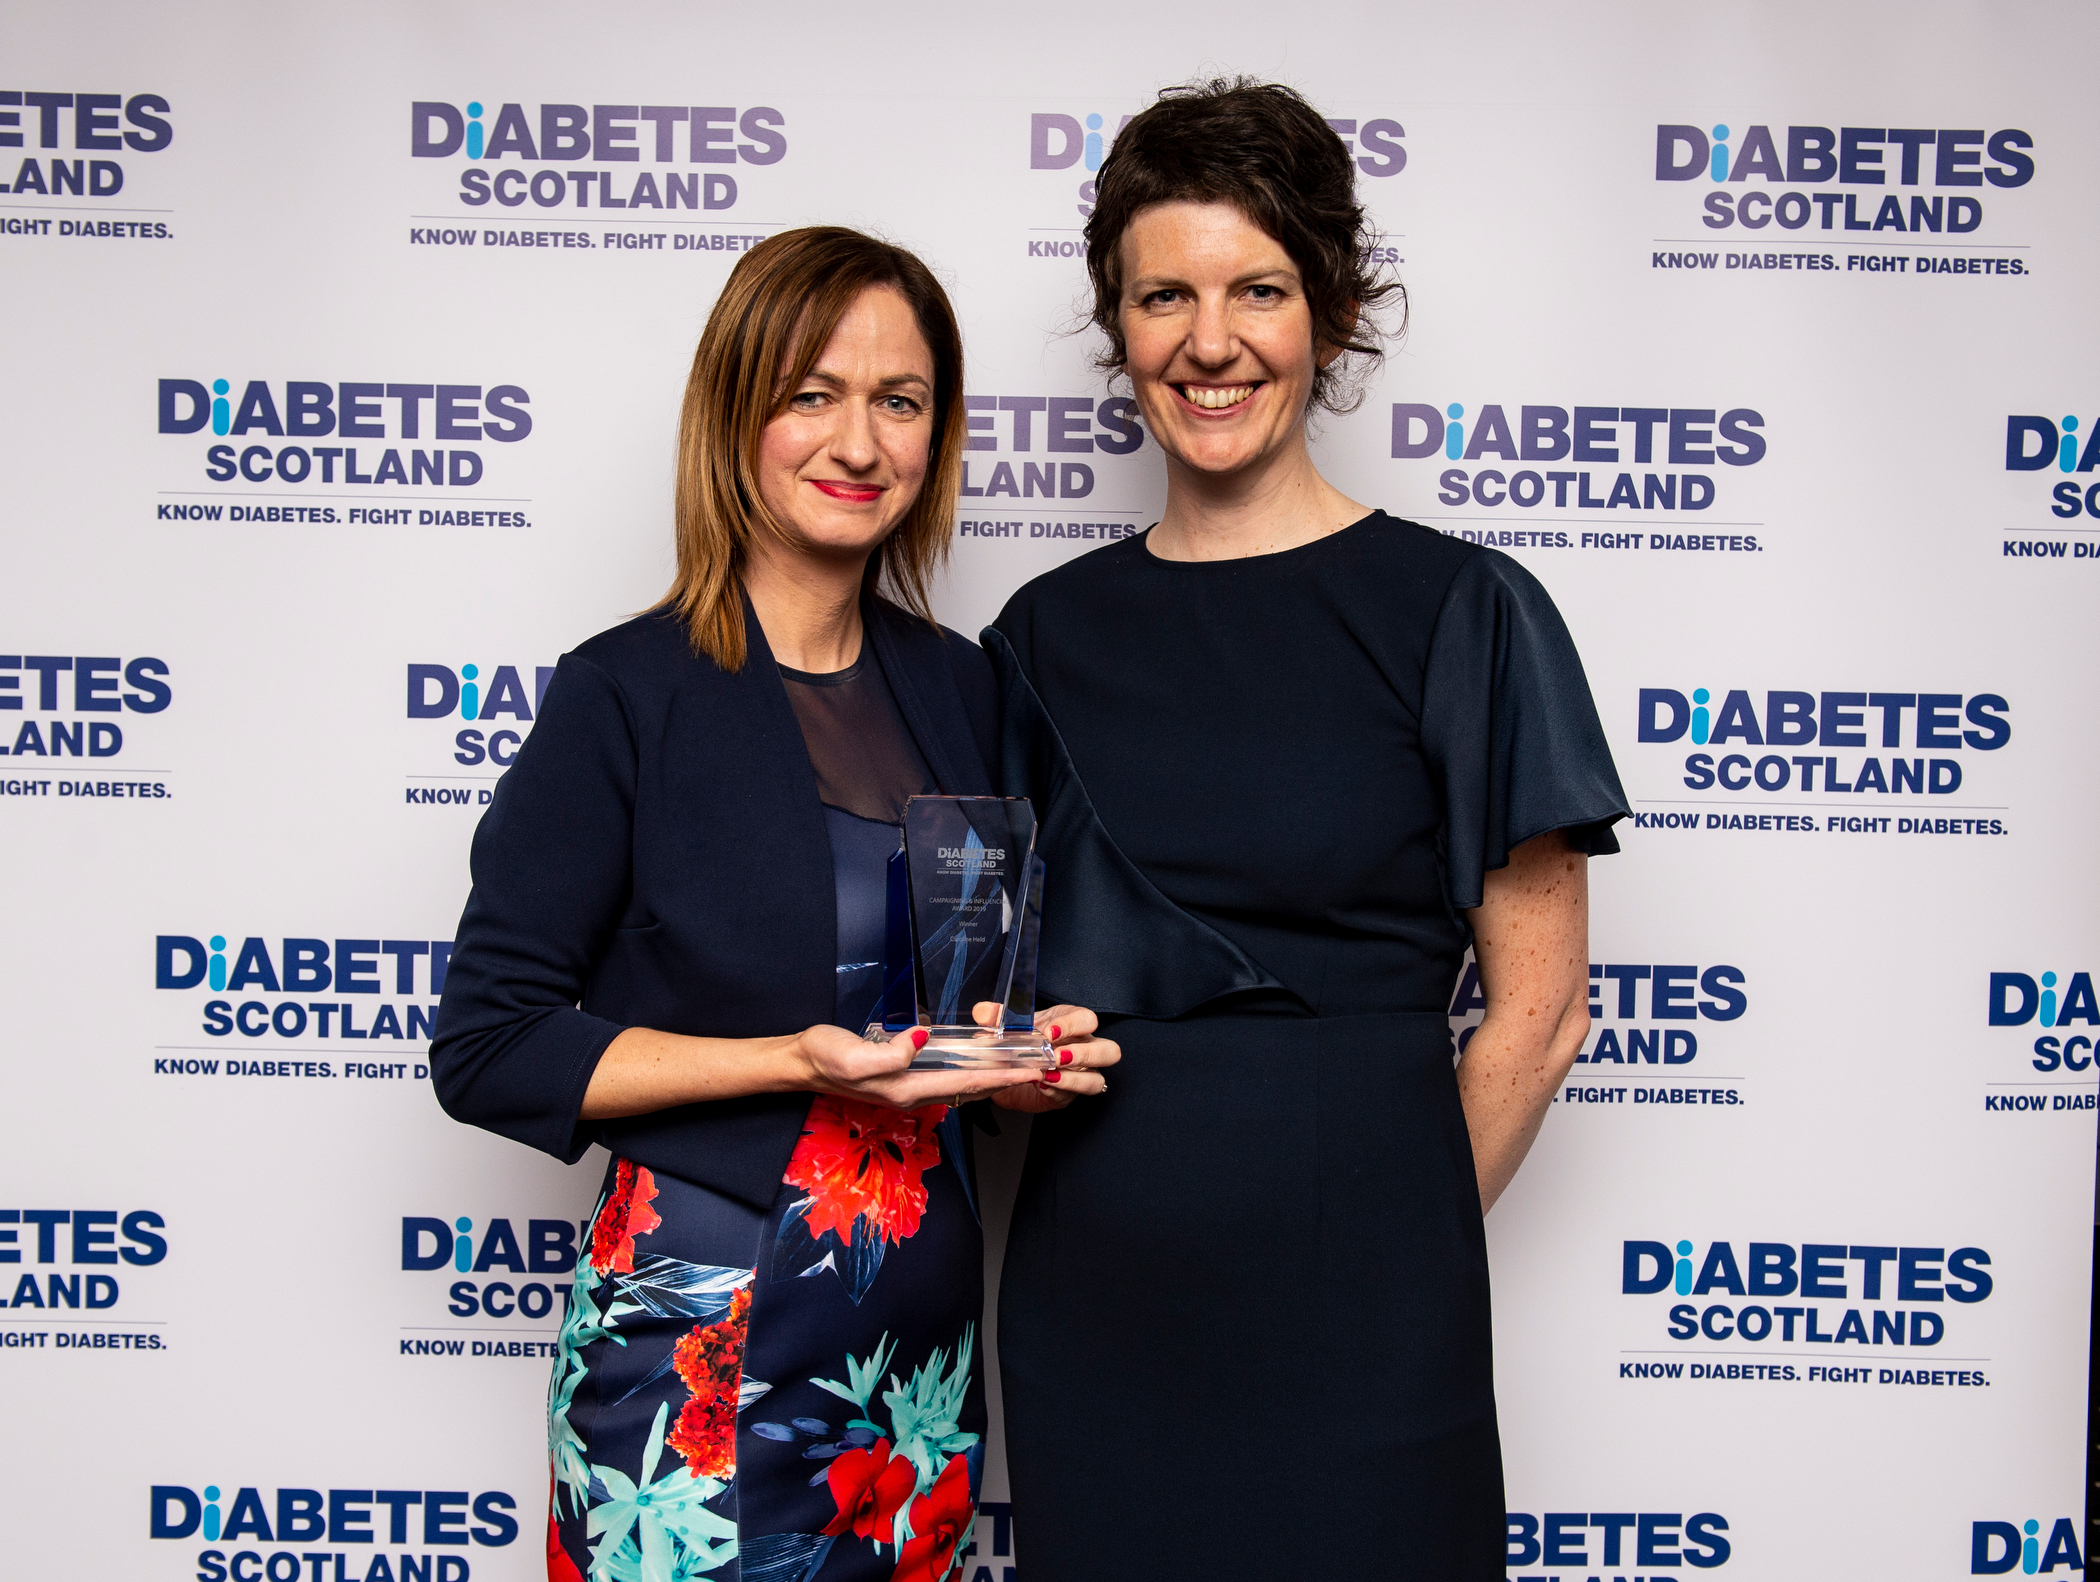 Caroline Held (left) with Angela Mitchell, Diabetes Scotland national director. 
Credit: Ian Jacobs